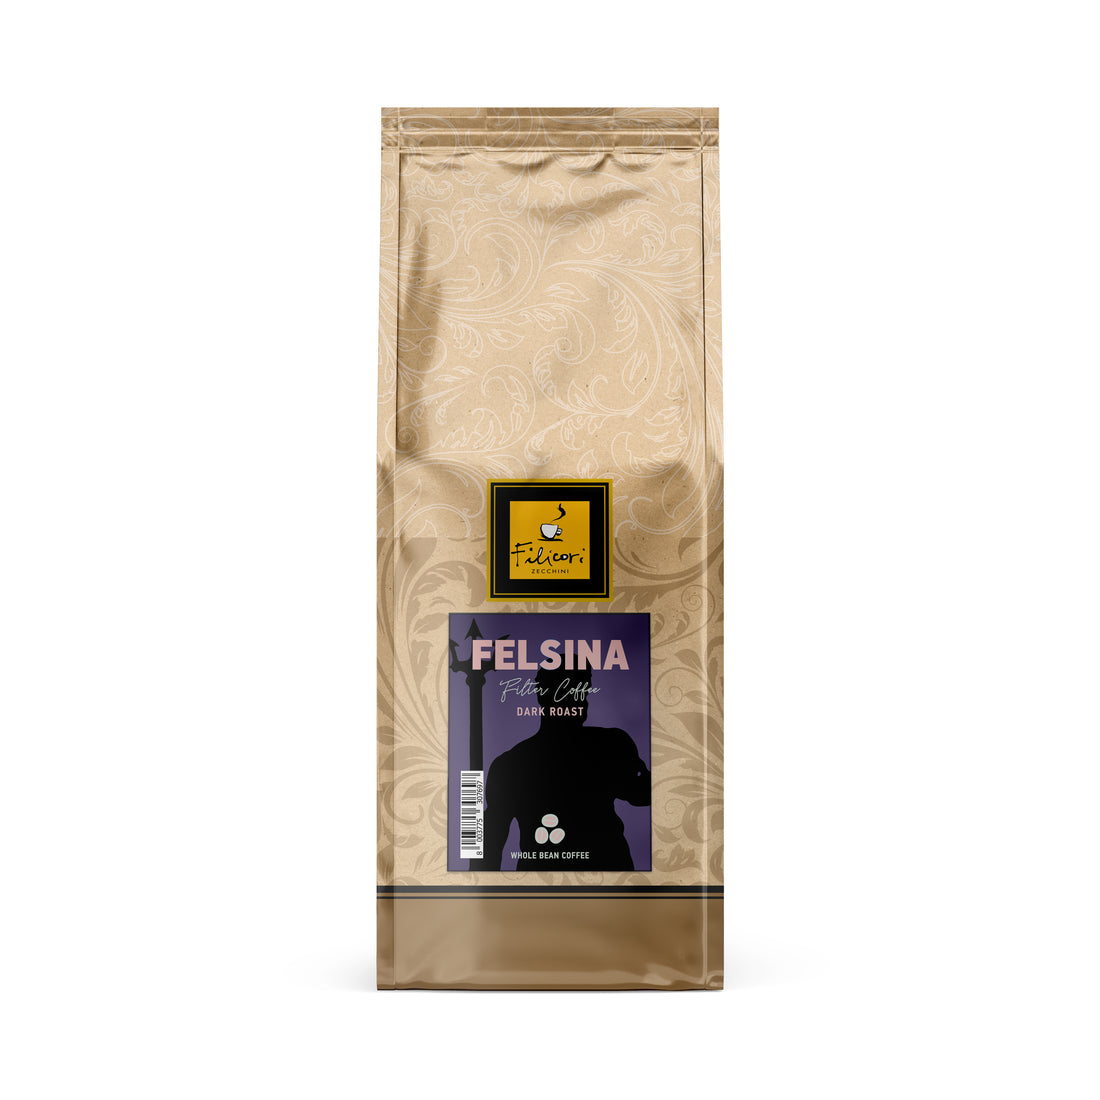 Filicori Zecchini Felsina Dark Roast Whole Bean Coffee bag from the front.